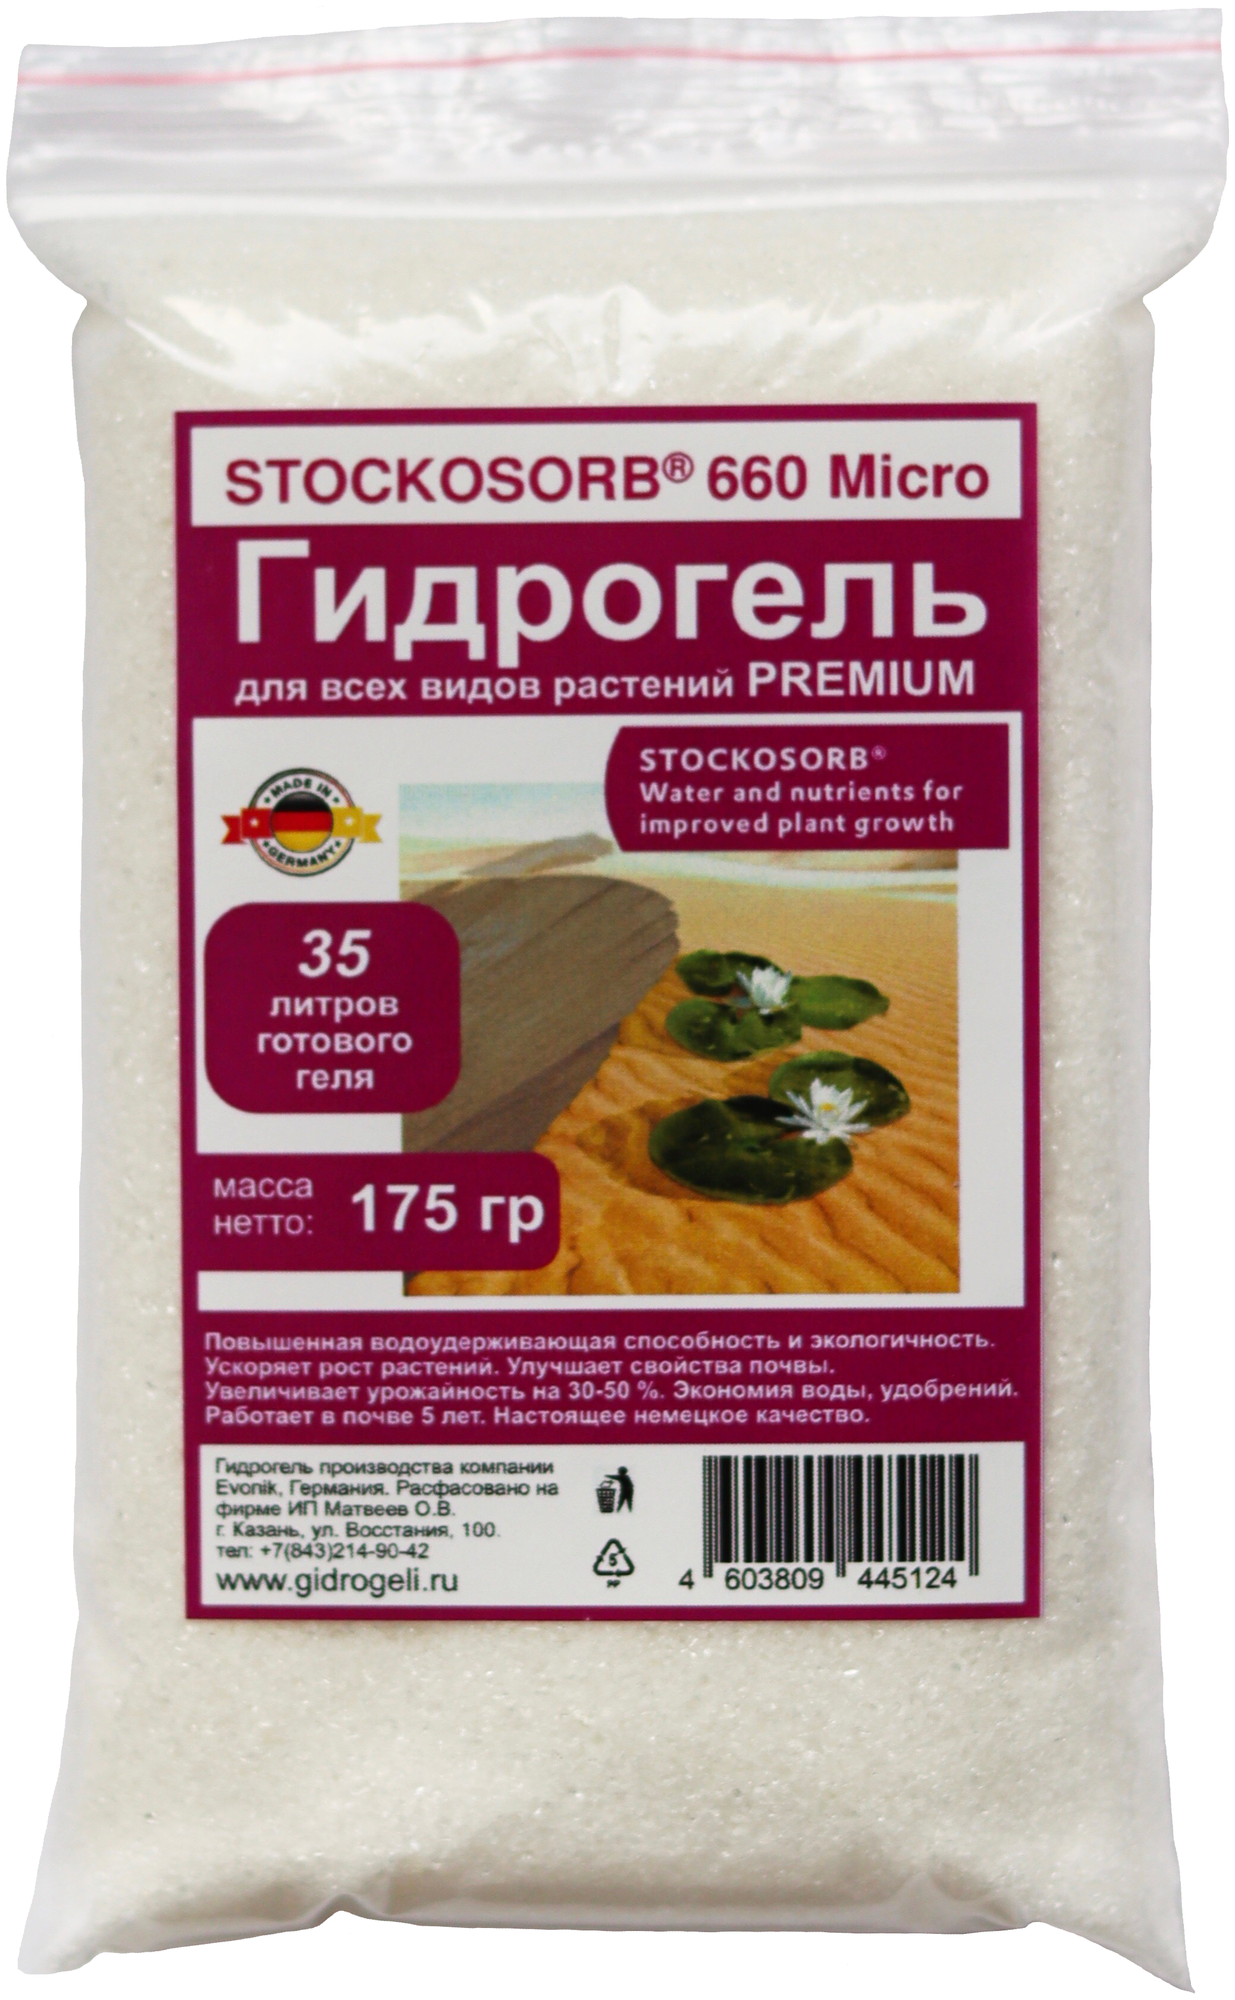 Гидрогель Stockosorb 660 Micro Вес 175 гр. Германия. ЭКО. - фотография № 1